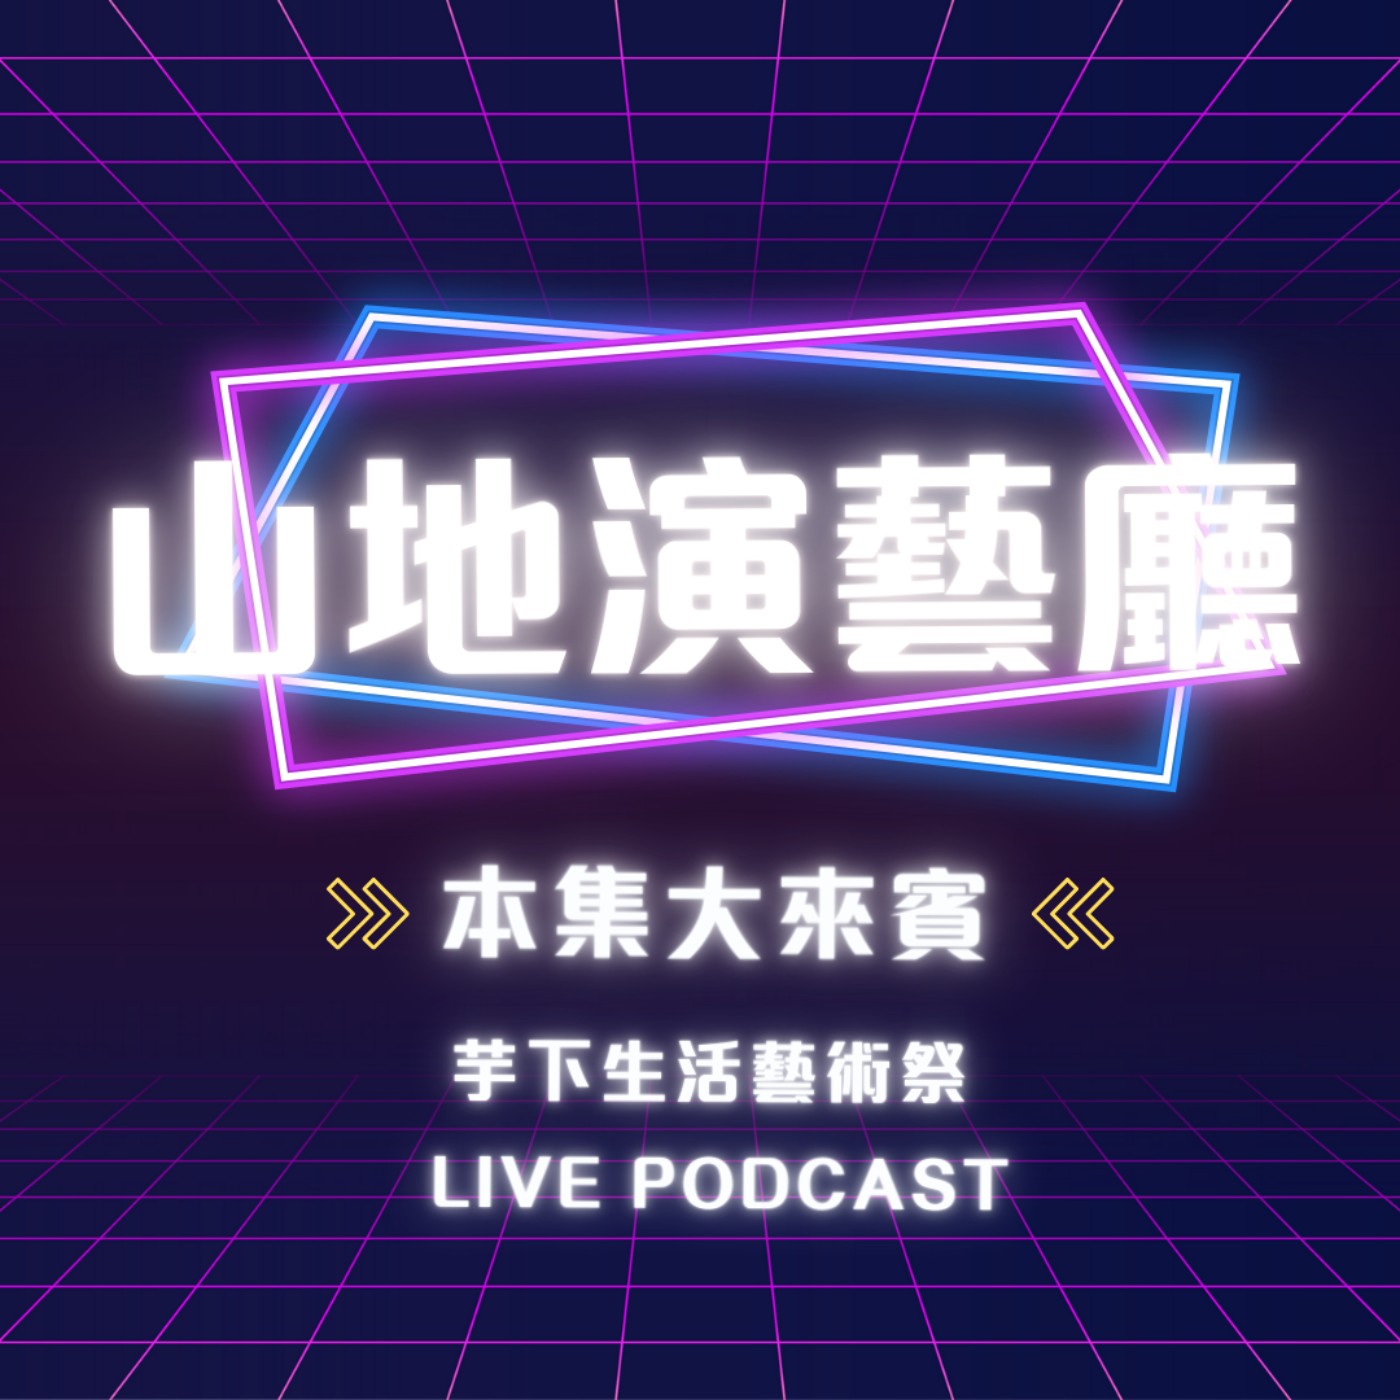 ep8.《芋下生活藝術祭》LIVE Podcast - 上